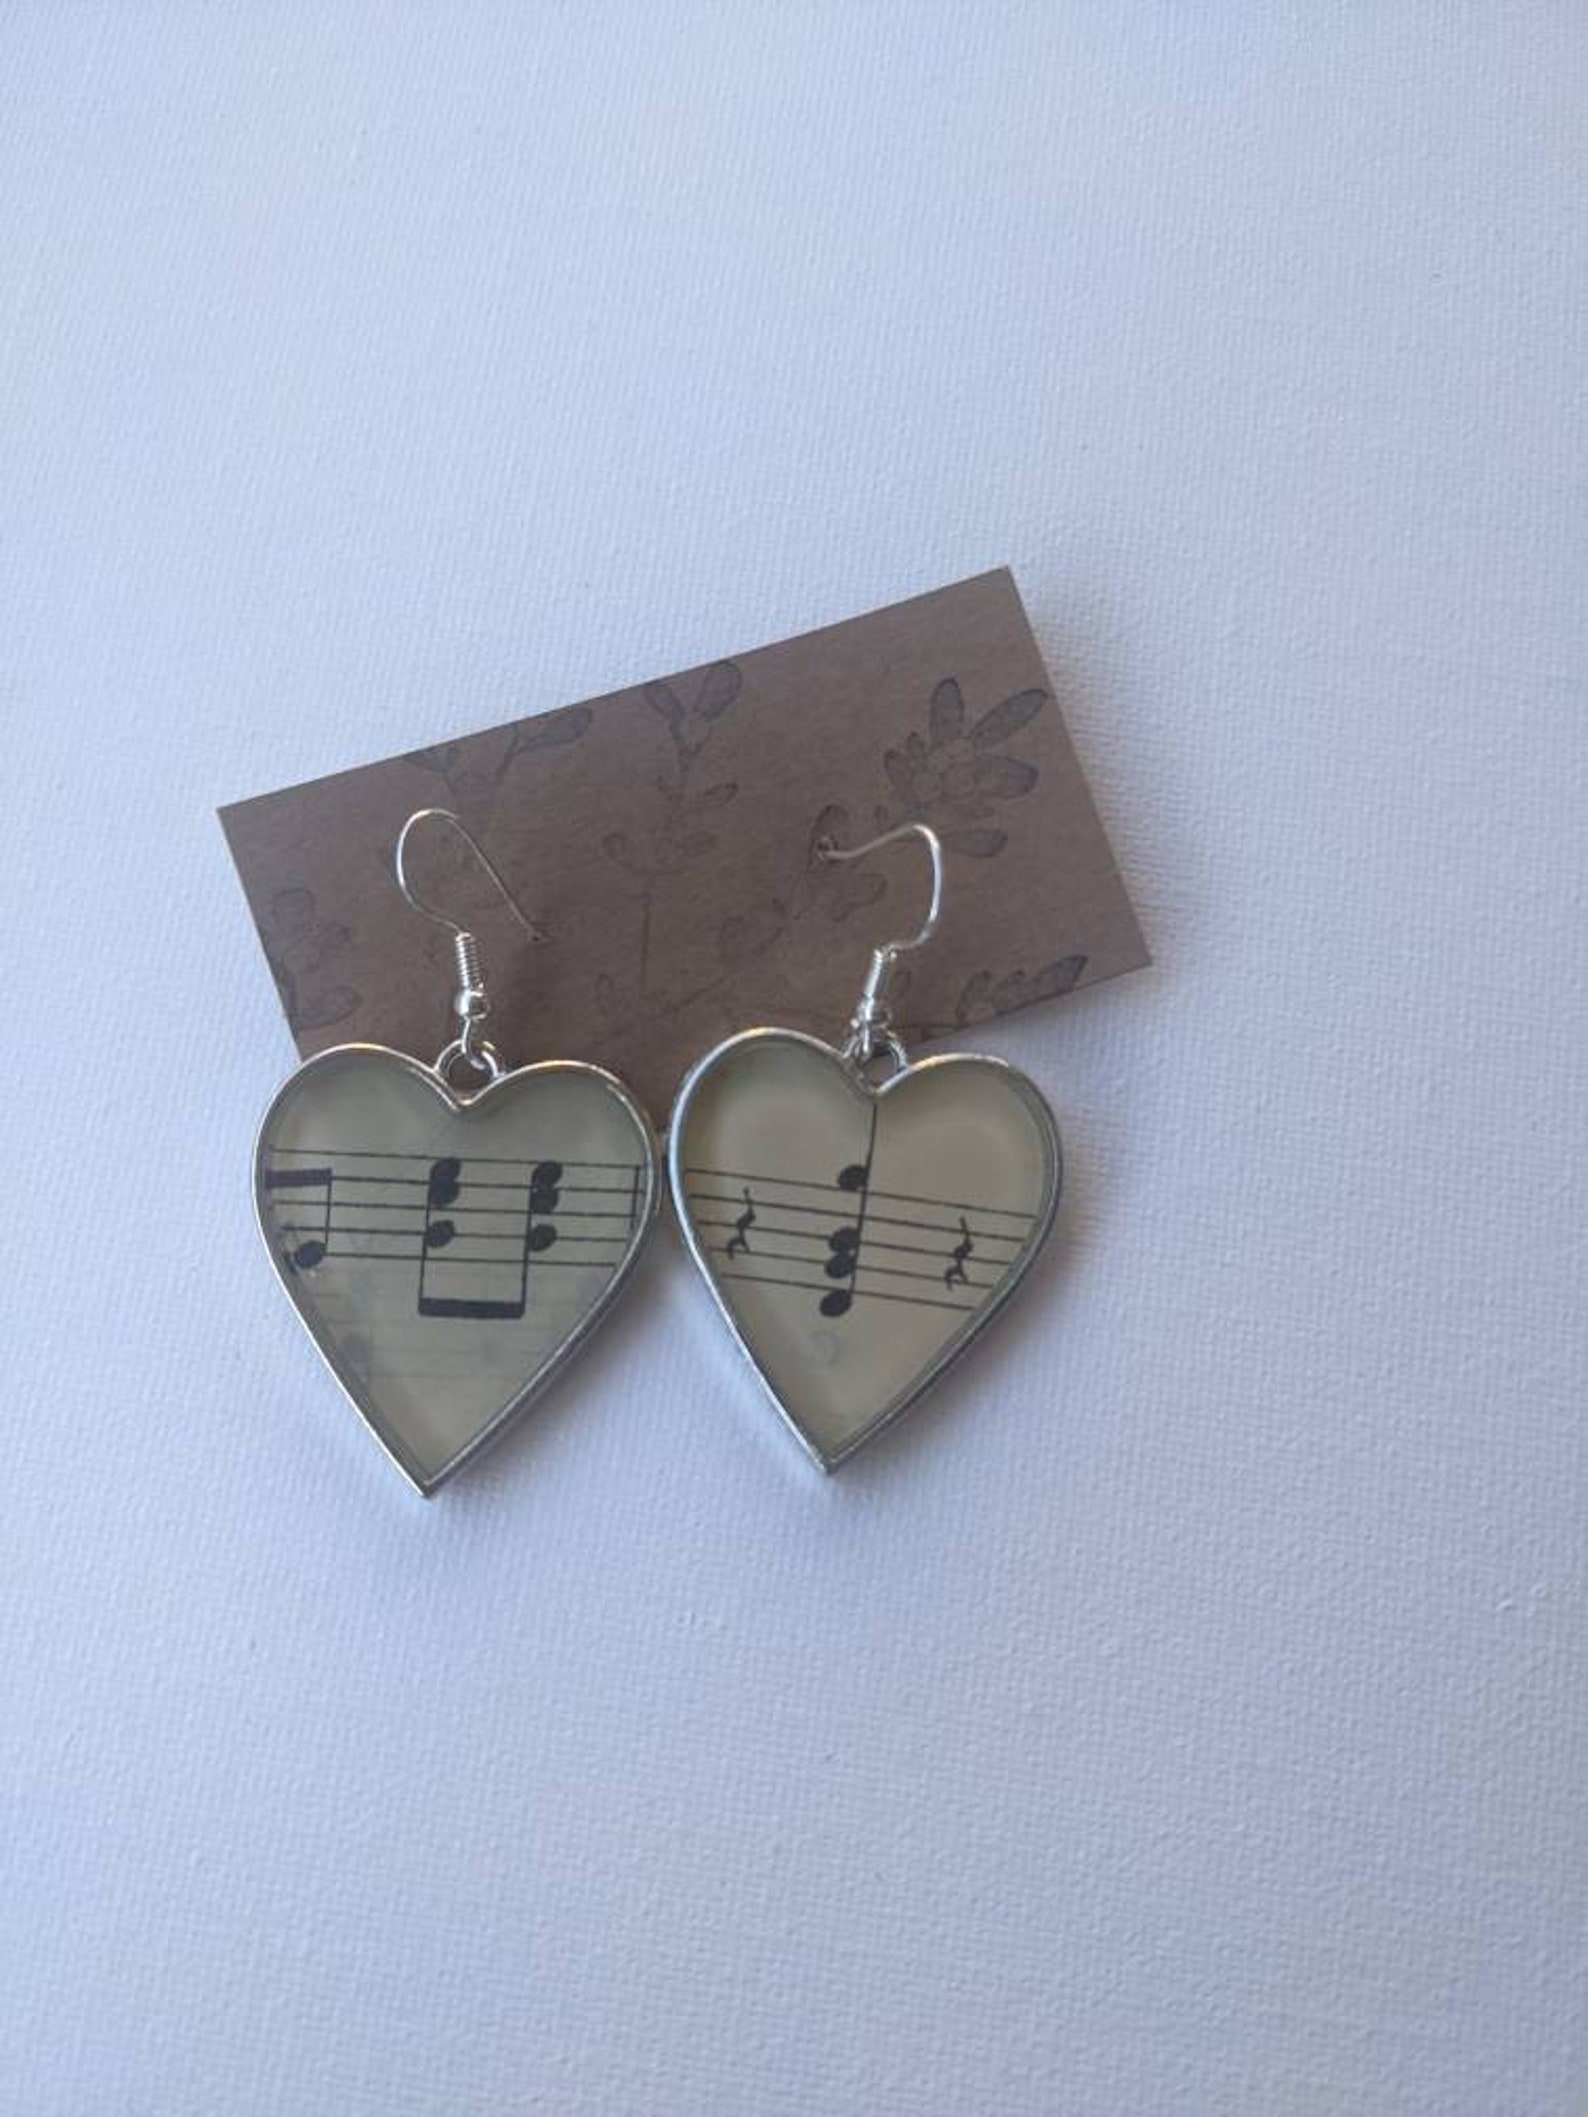 Music note earrings | Etsy